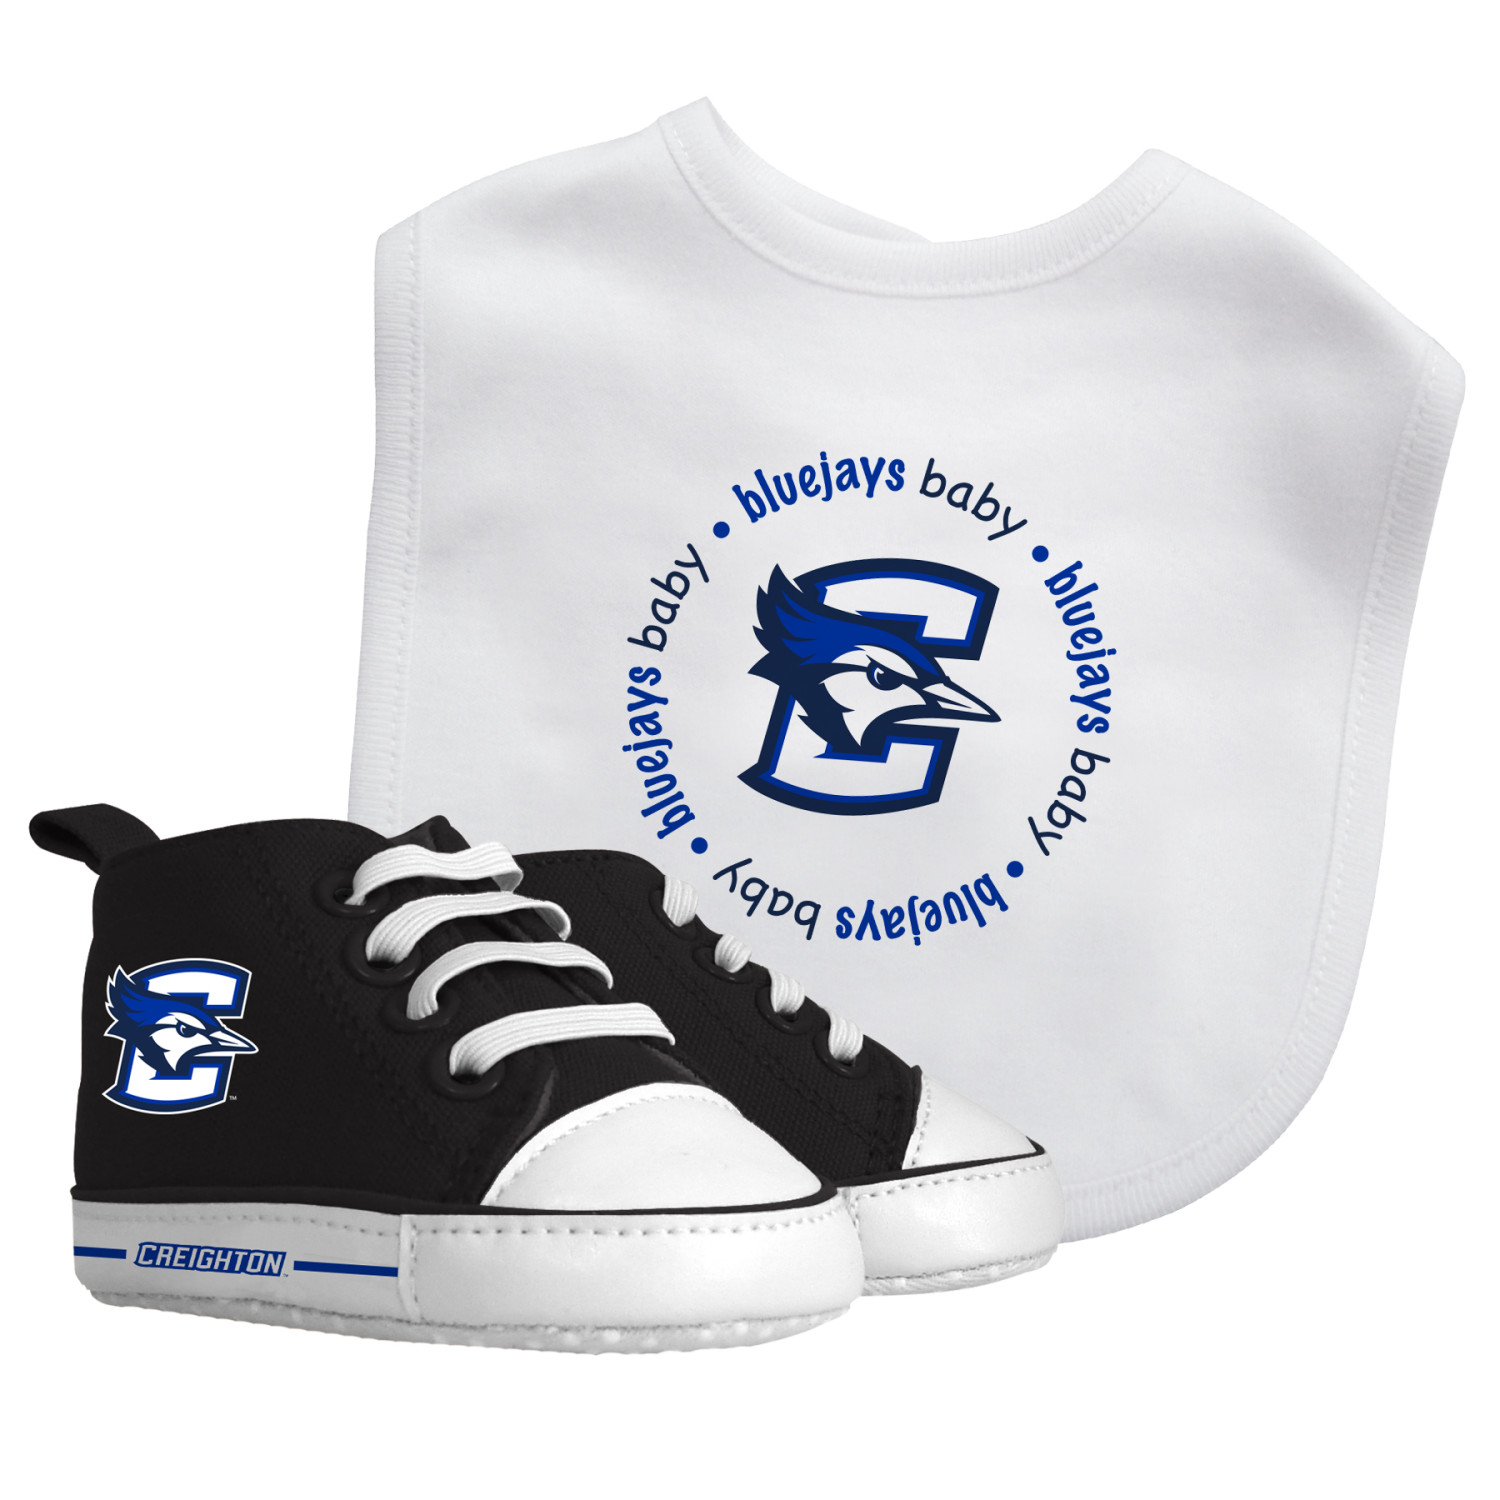 BabyFanatic 2 Piece Bib and Shoes - NCAA Creighton - White Unisex Infant Apparel - image 2 of 3